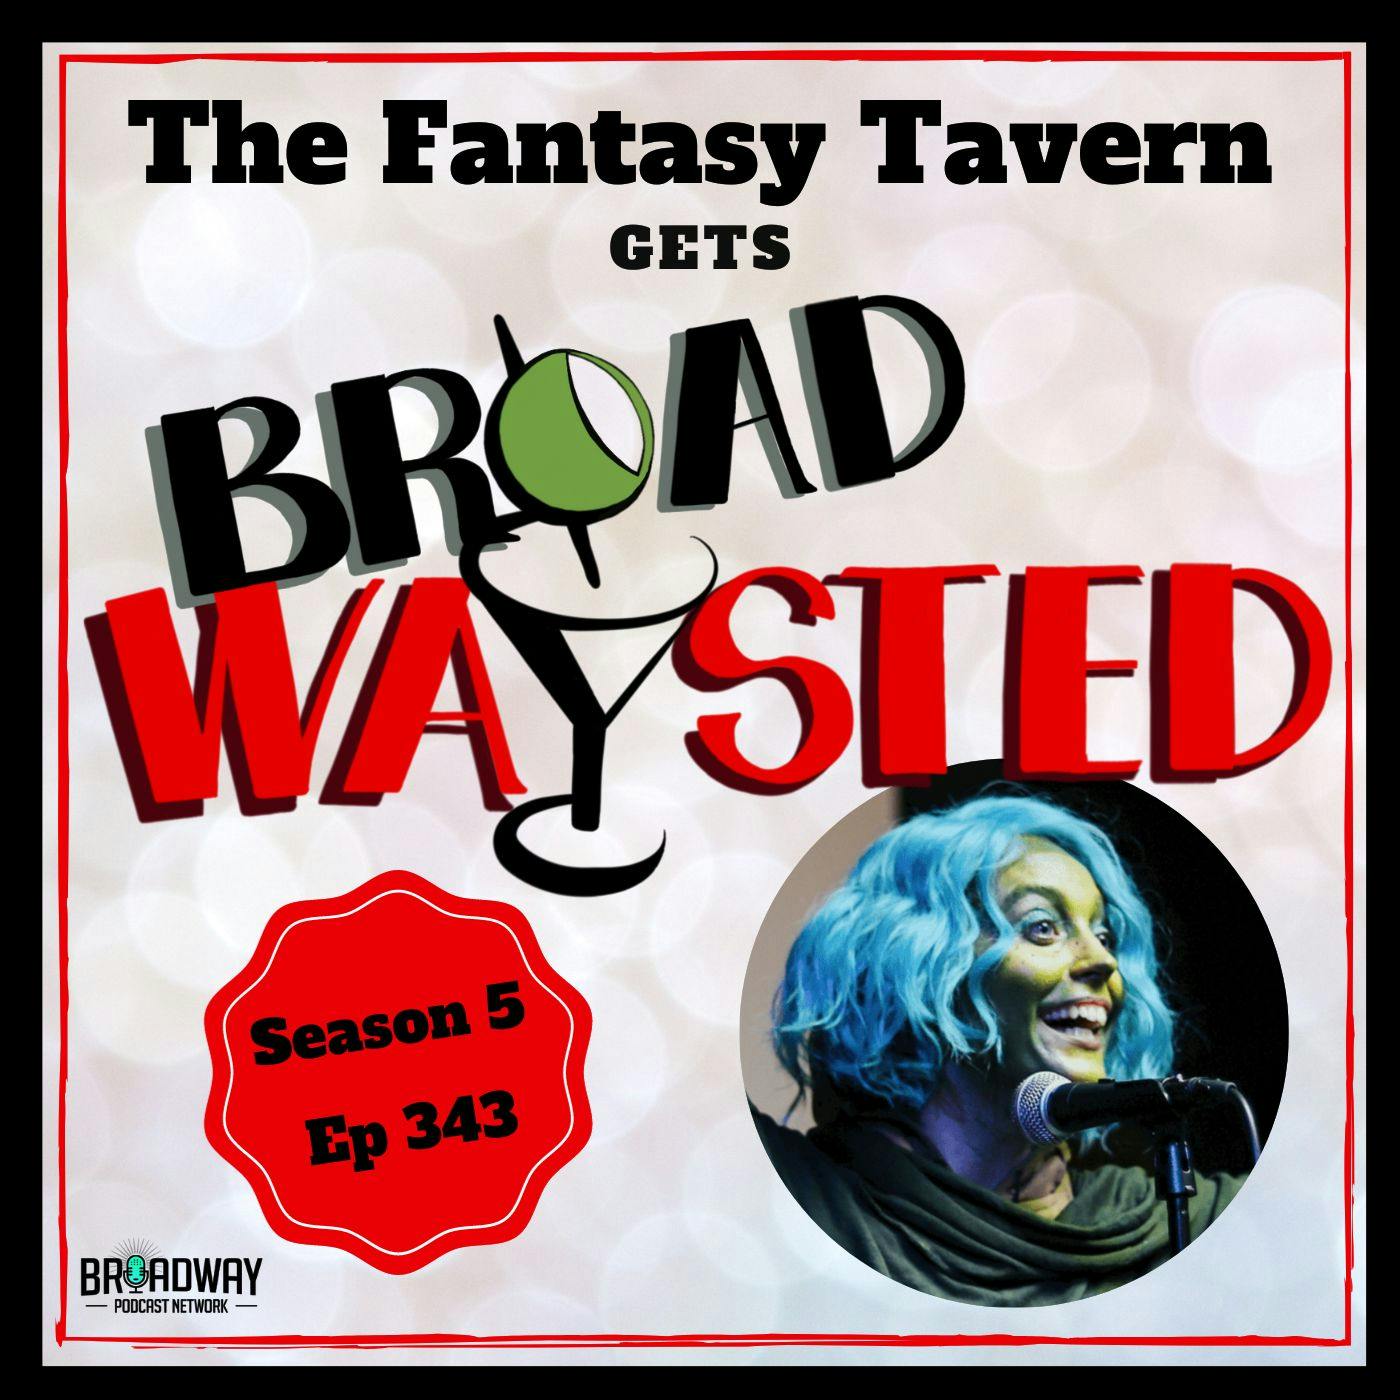 Episode 343: The Fantasy Tavern gets Broadwaysted!